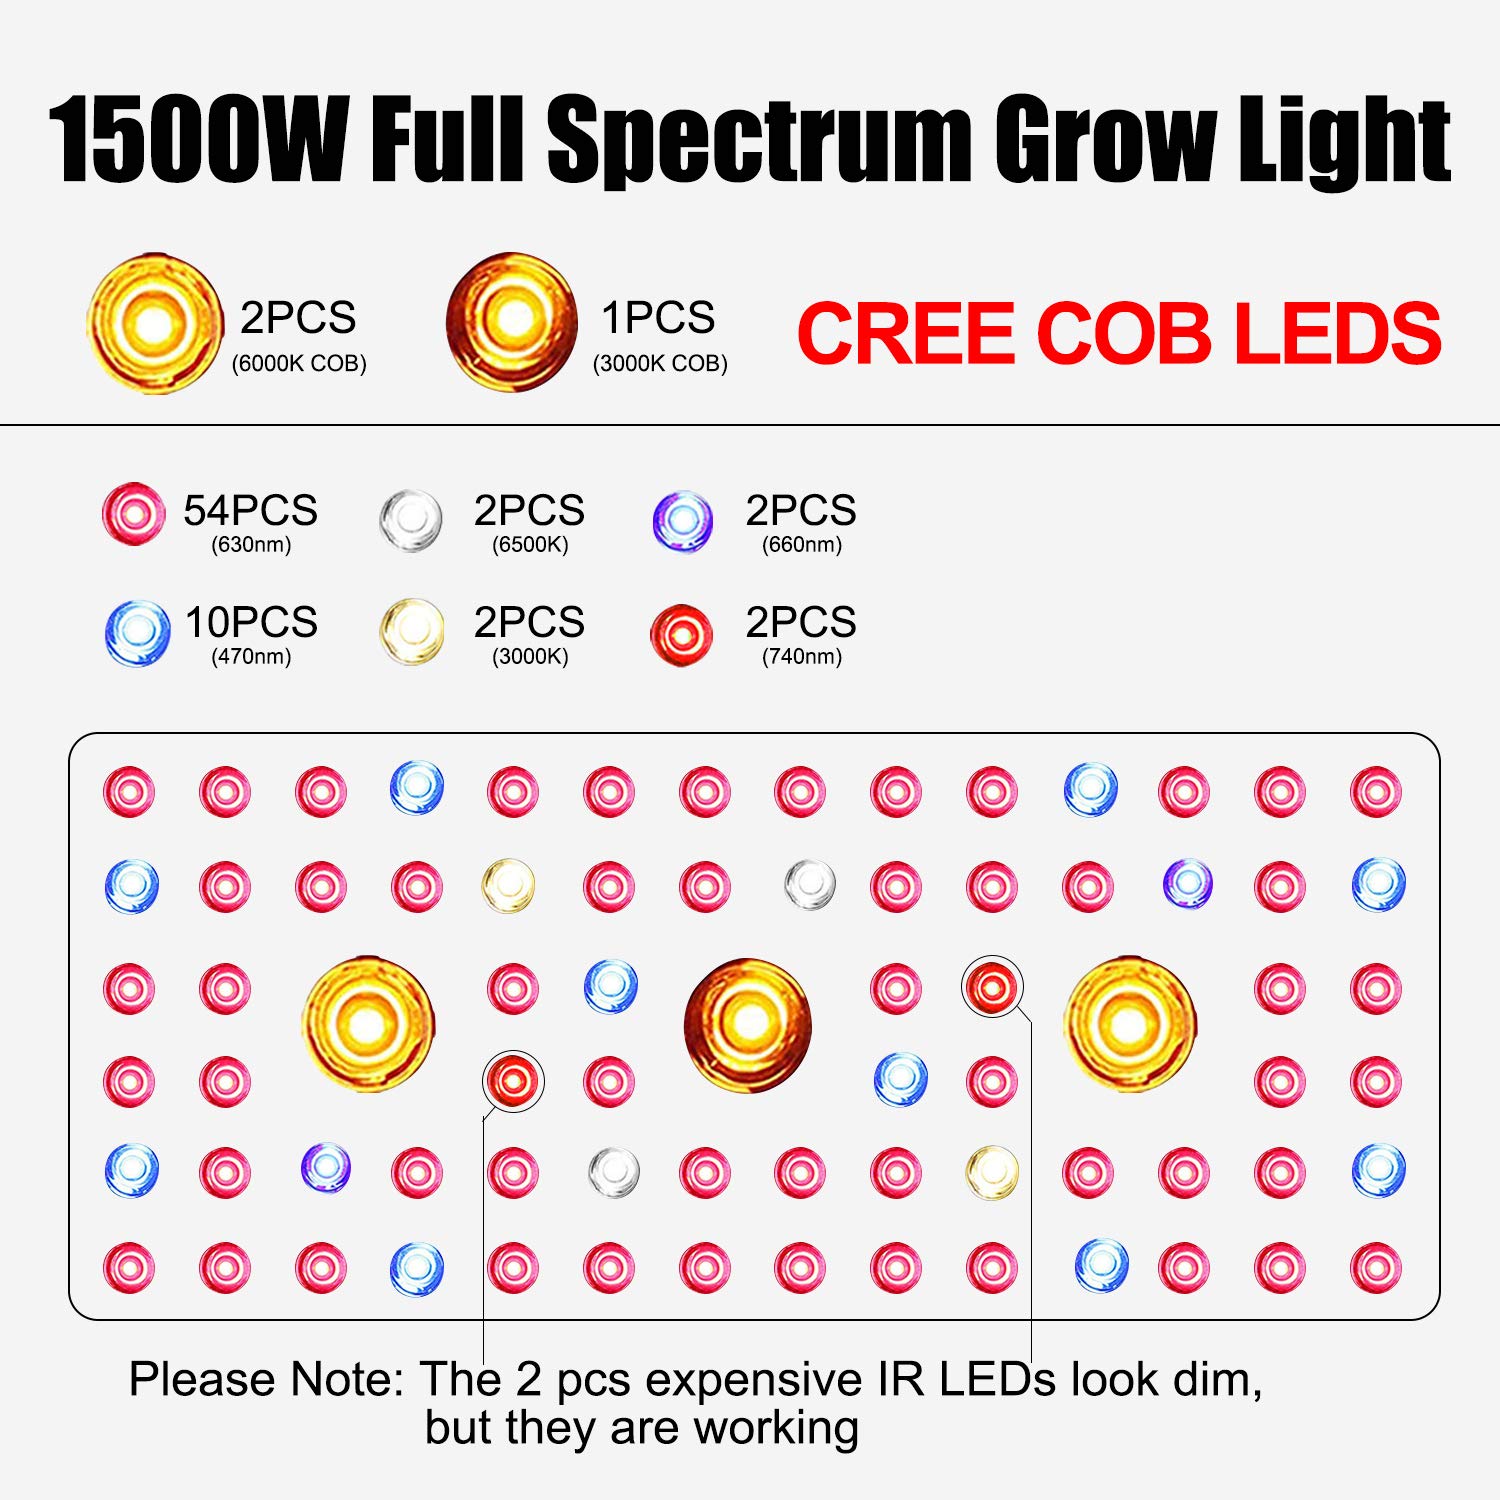 1500W Full Spectrum Grow Light